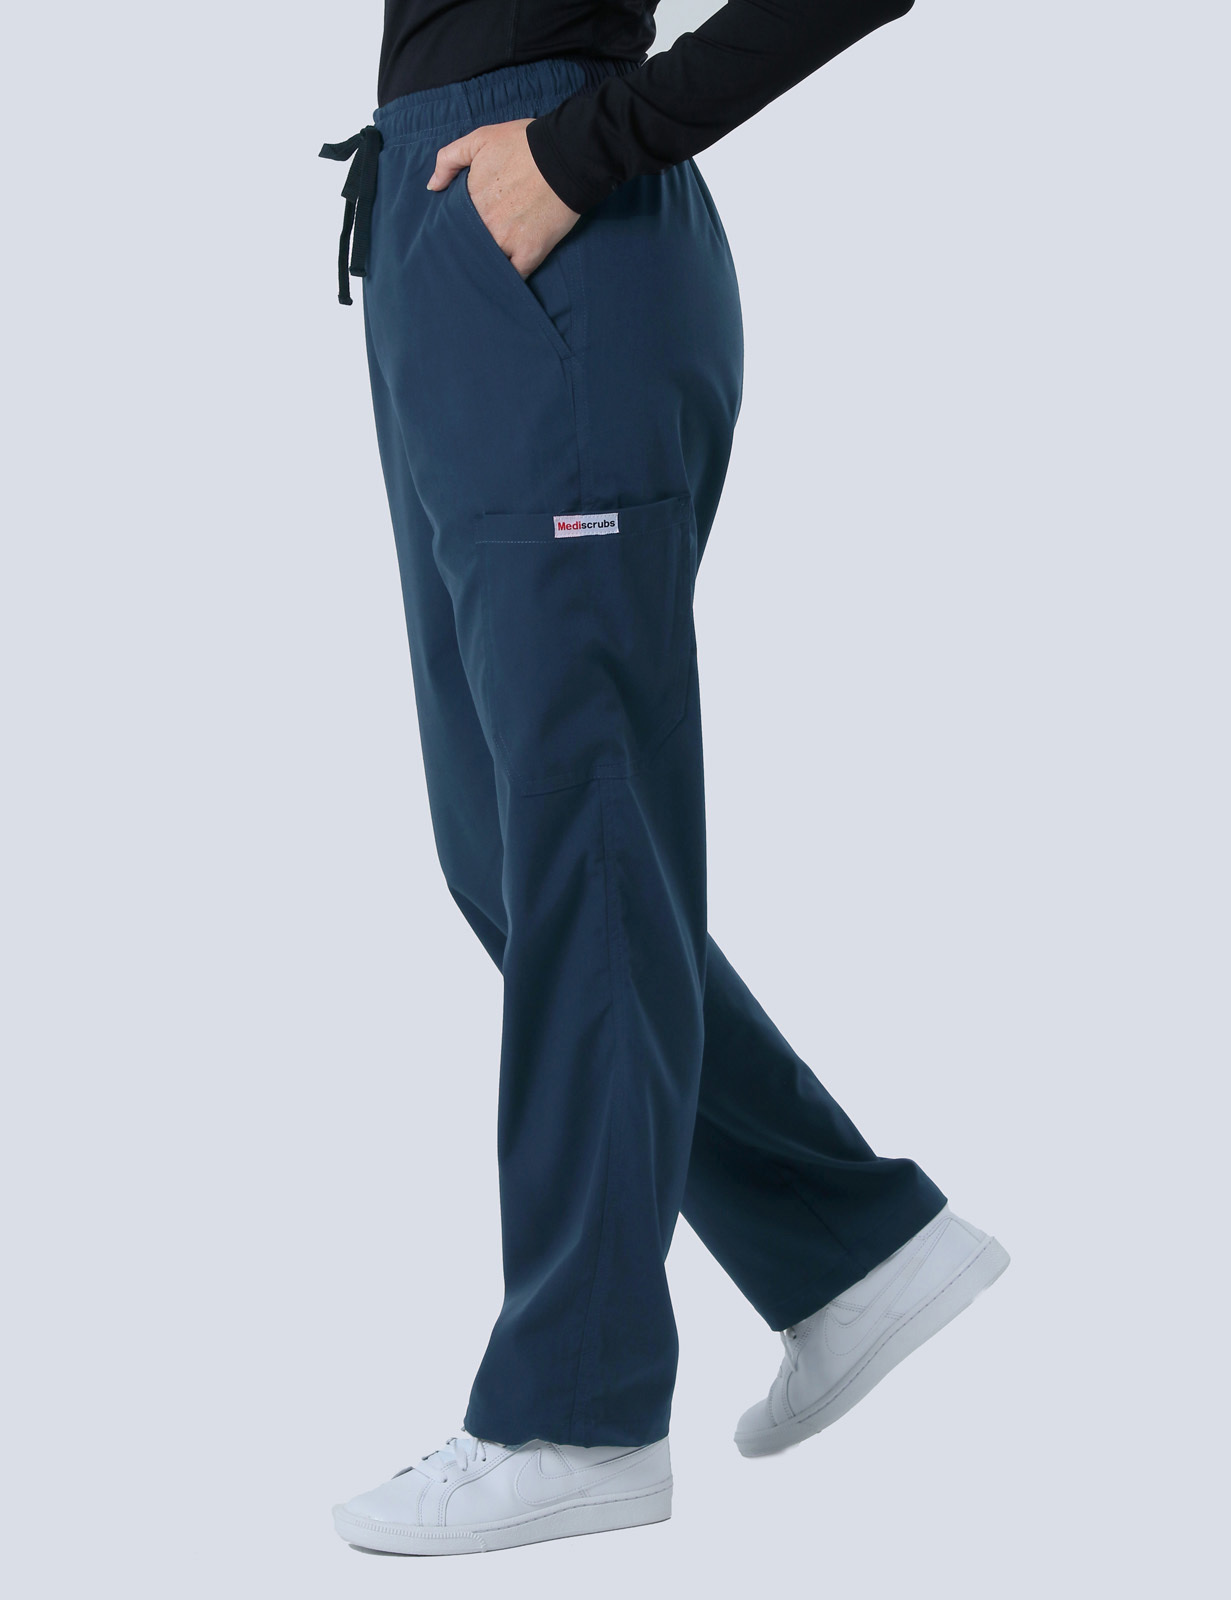 Ipswich Hospital Nurse - Ward 7B Uniform Set Bundle (Women's Fit Solid Top and Cargo Pants in Navy incl Logos)